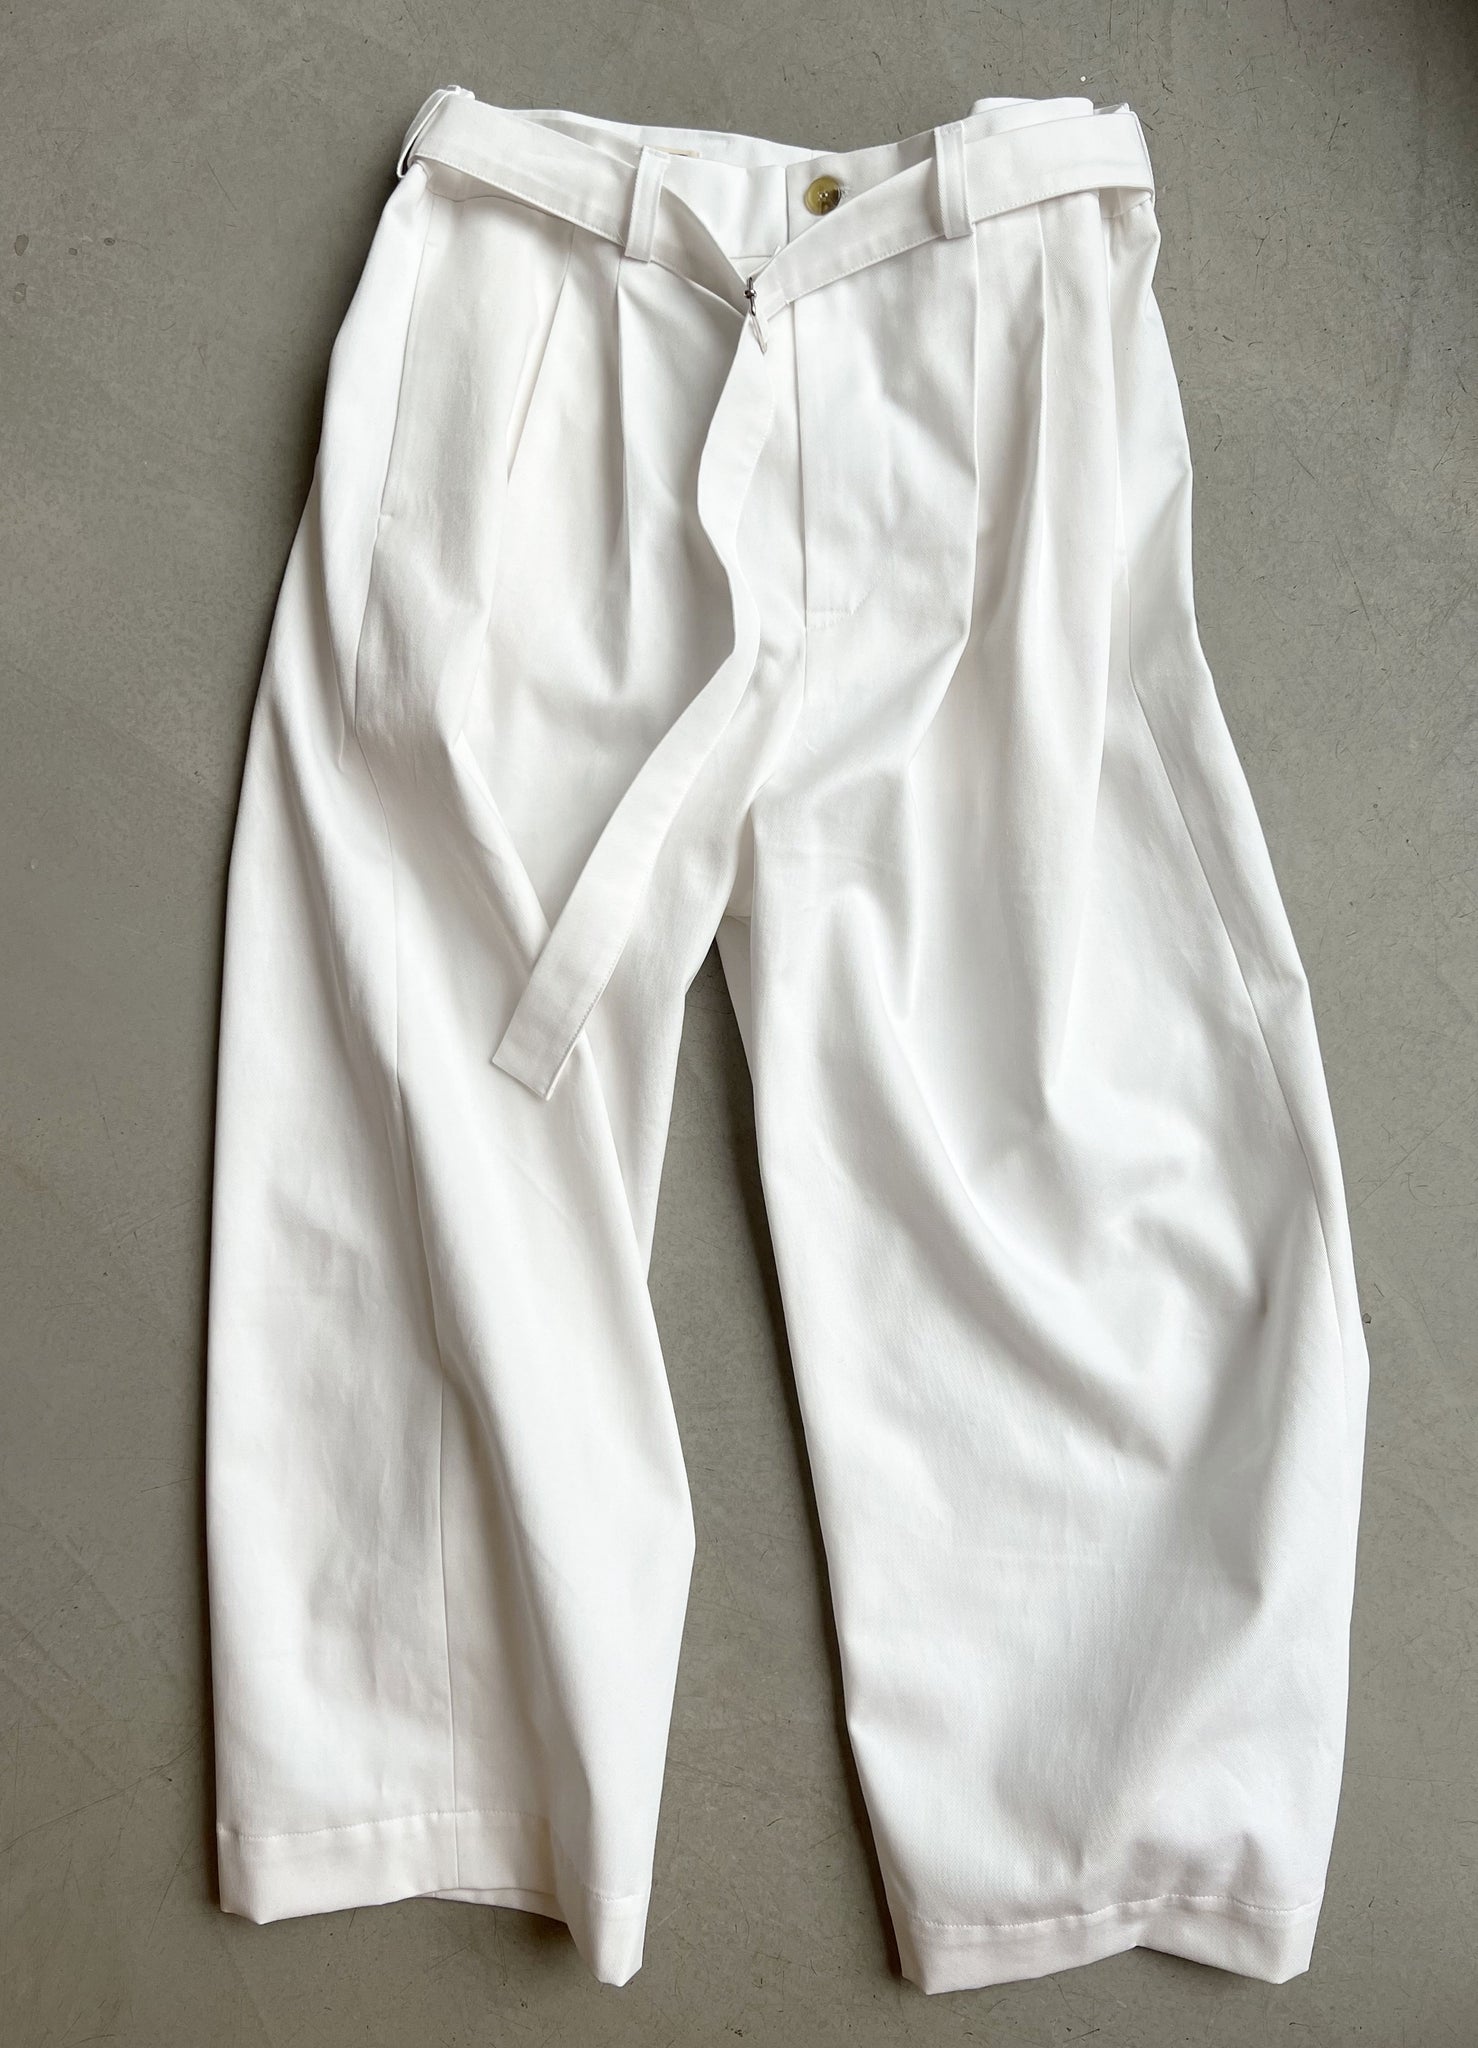 Paris trousers white